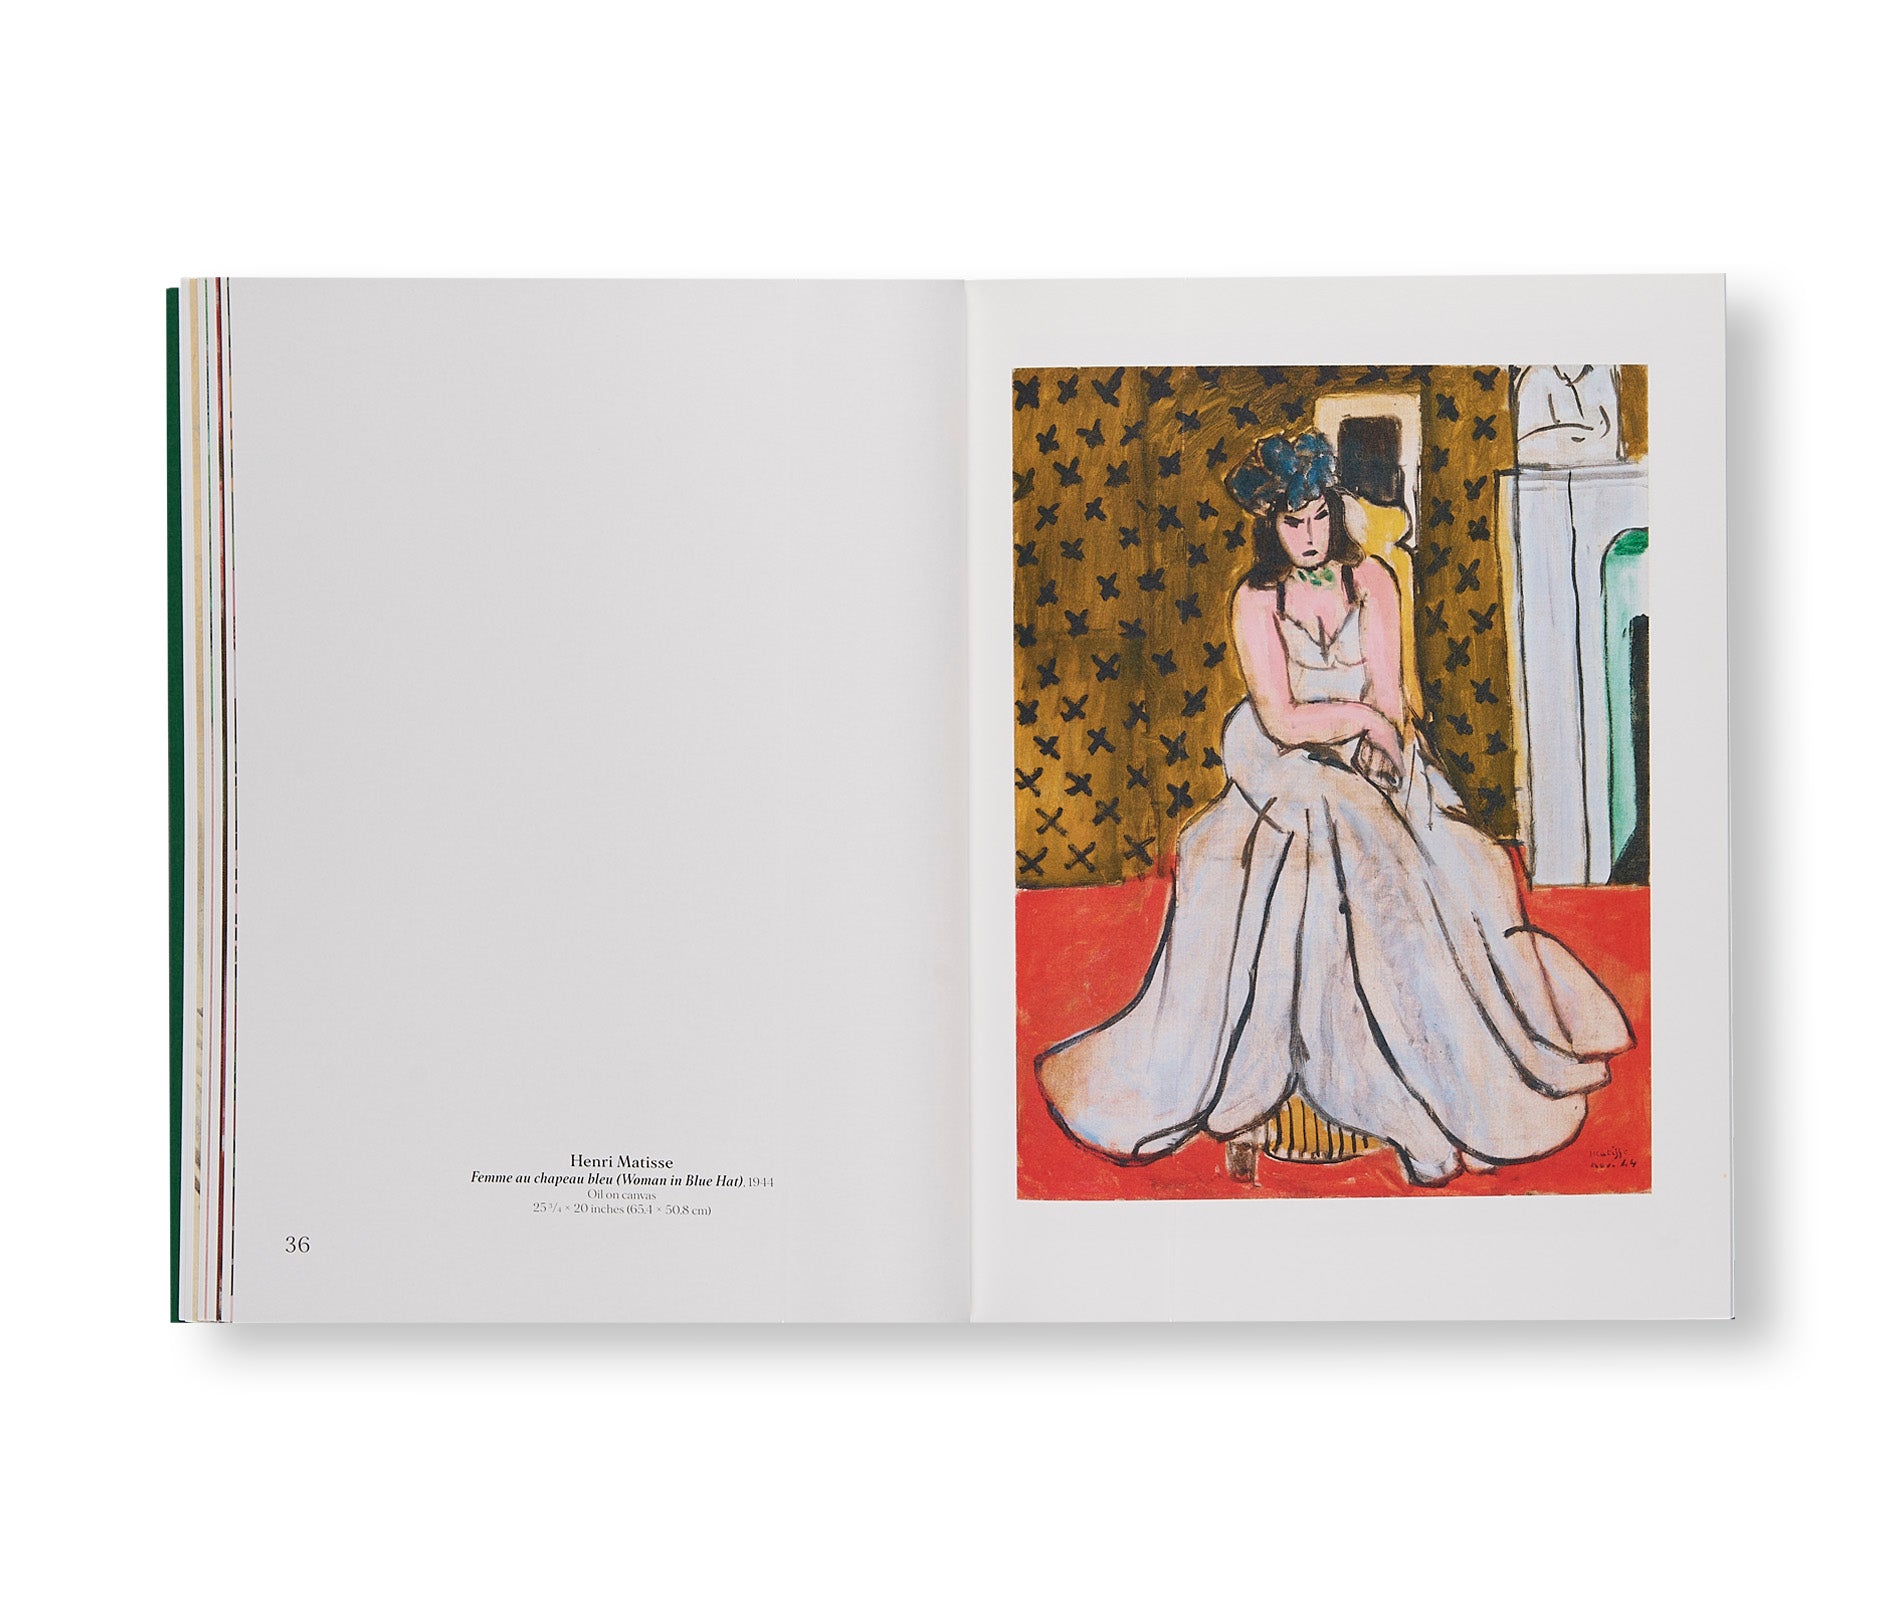 HENRI MATISSE & JONAS WOOD by Henri Matisse, Jonas Wood